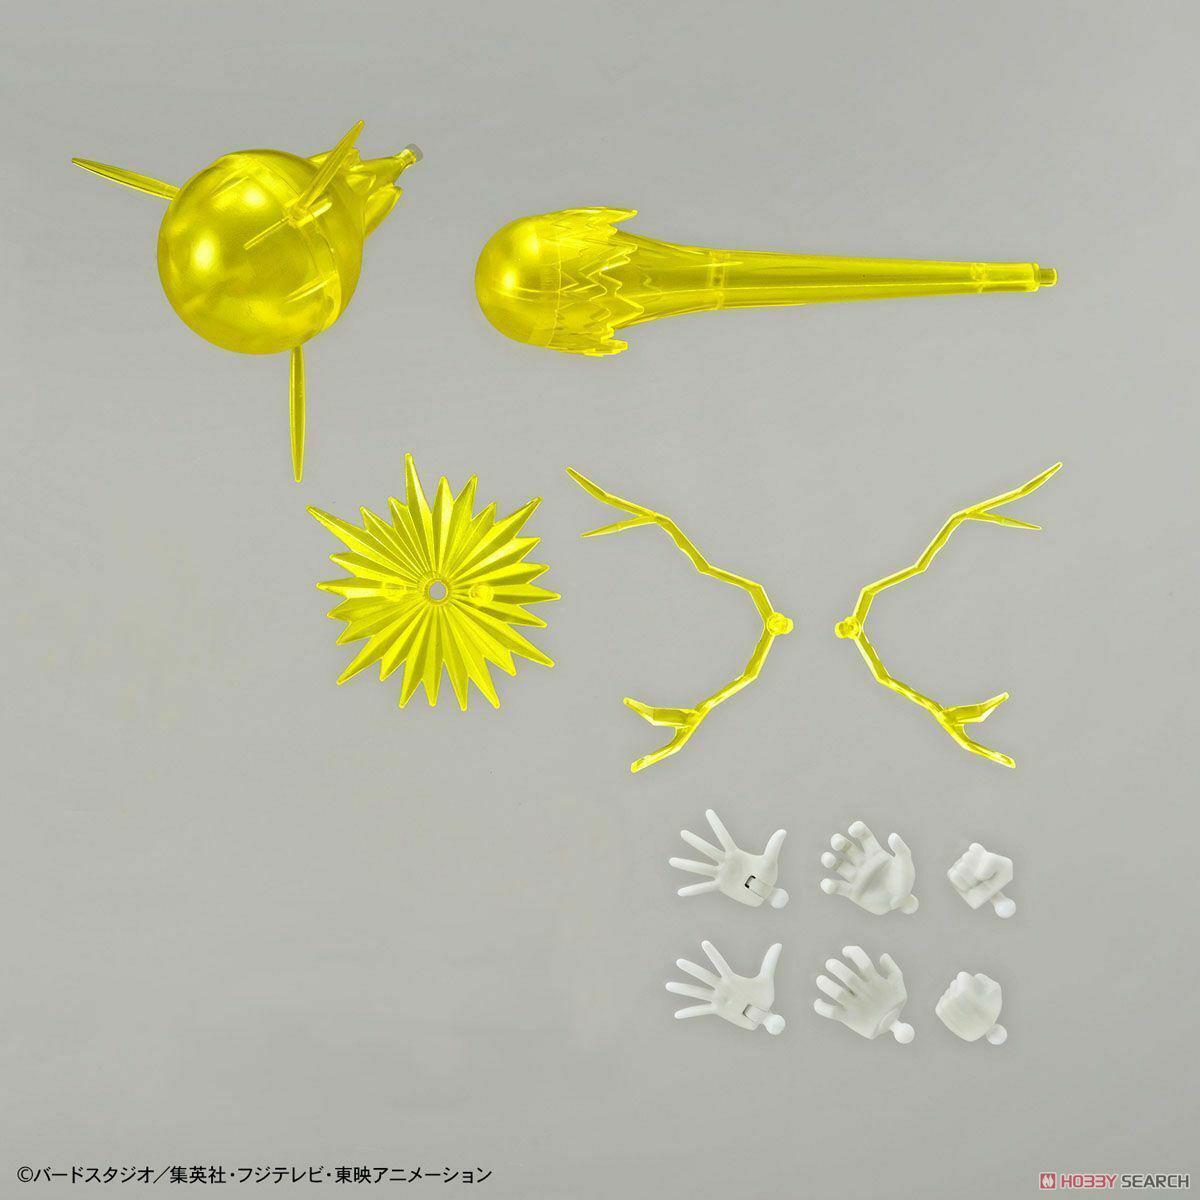 Dragon Ball Figure-rise Standard Super Saiyan God Super Saiyan Vegeta-Bandai-Ace Cards &amp; Collectibles